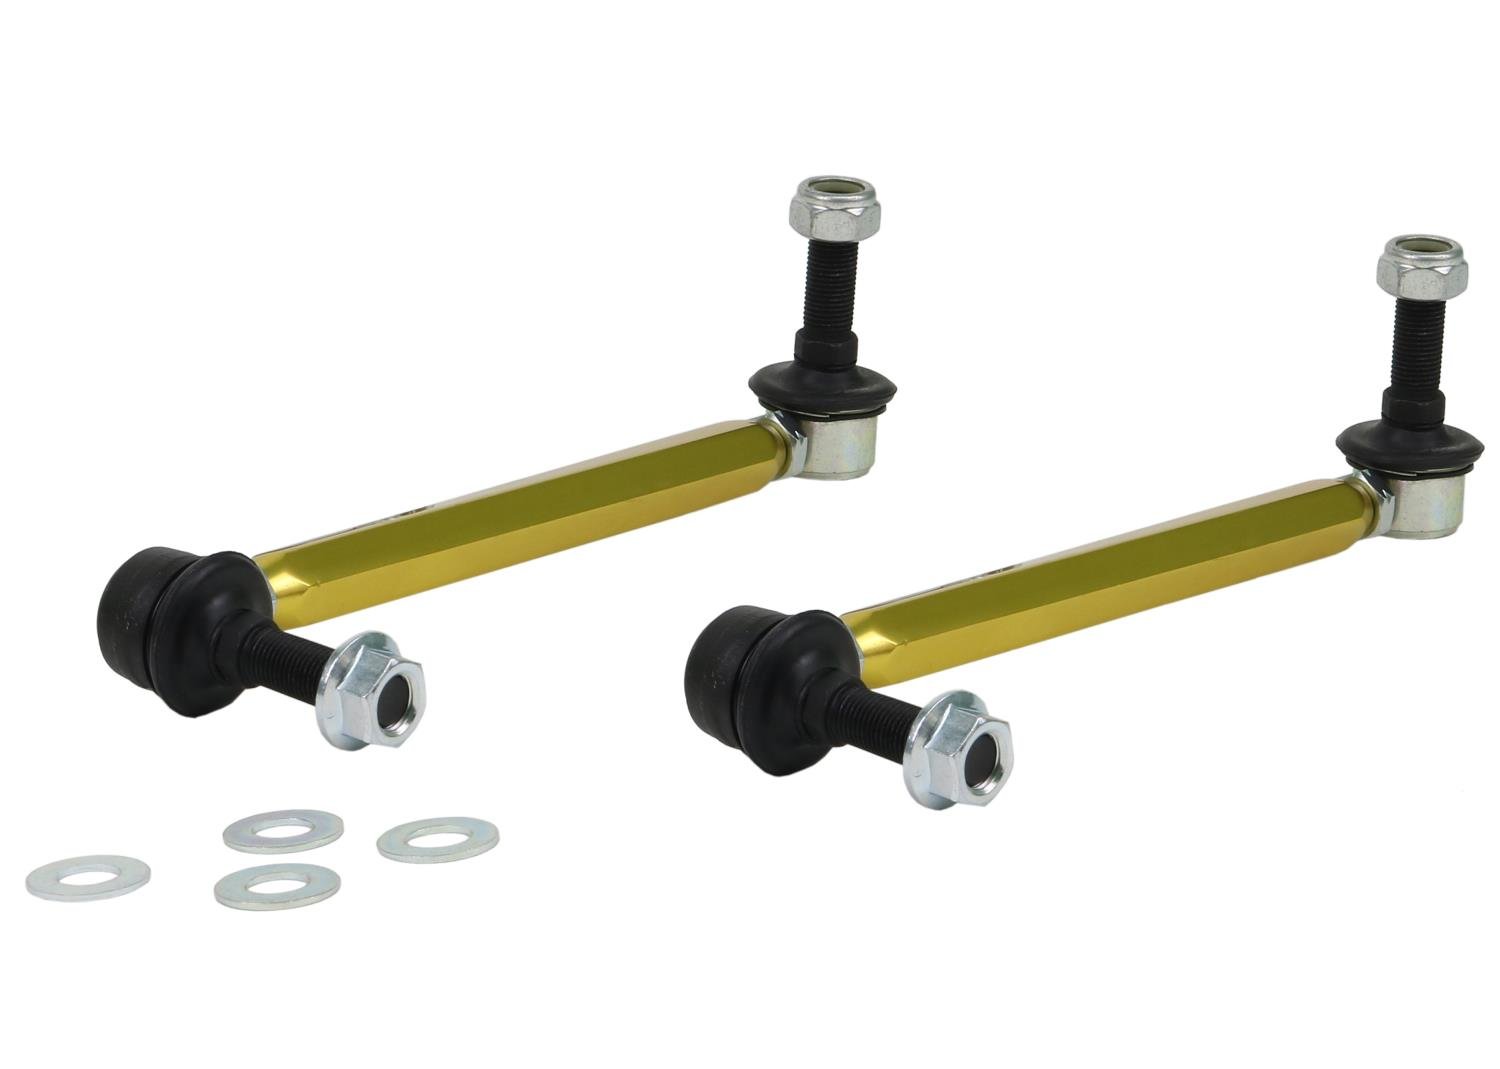 KLC180-255 Universal Sway Bar Link Assembly Heavy Duty Adjustable Steel Ball